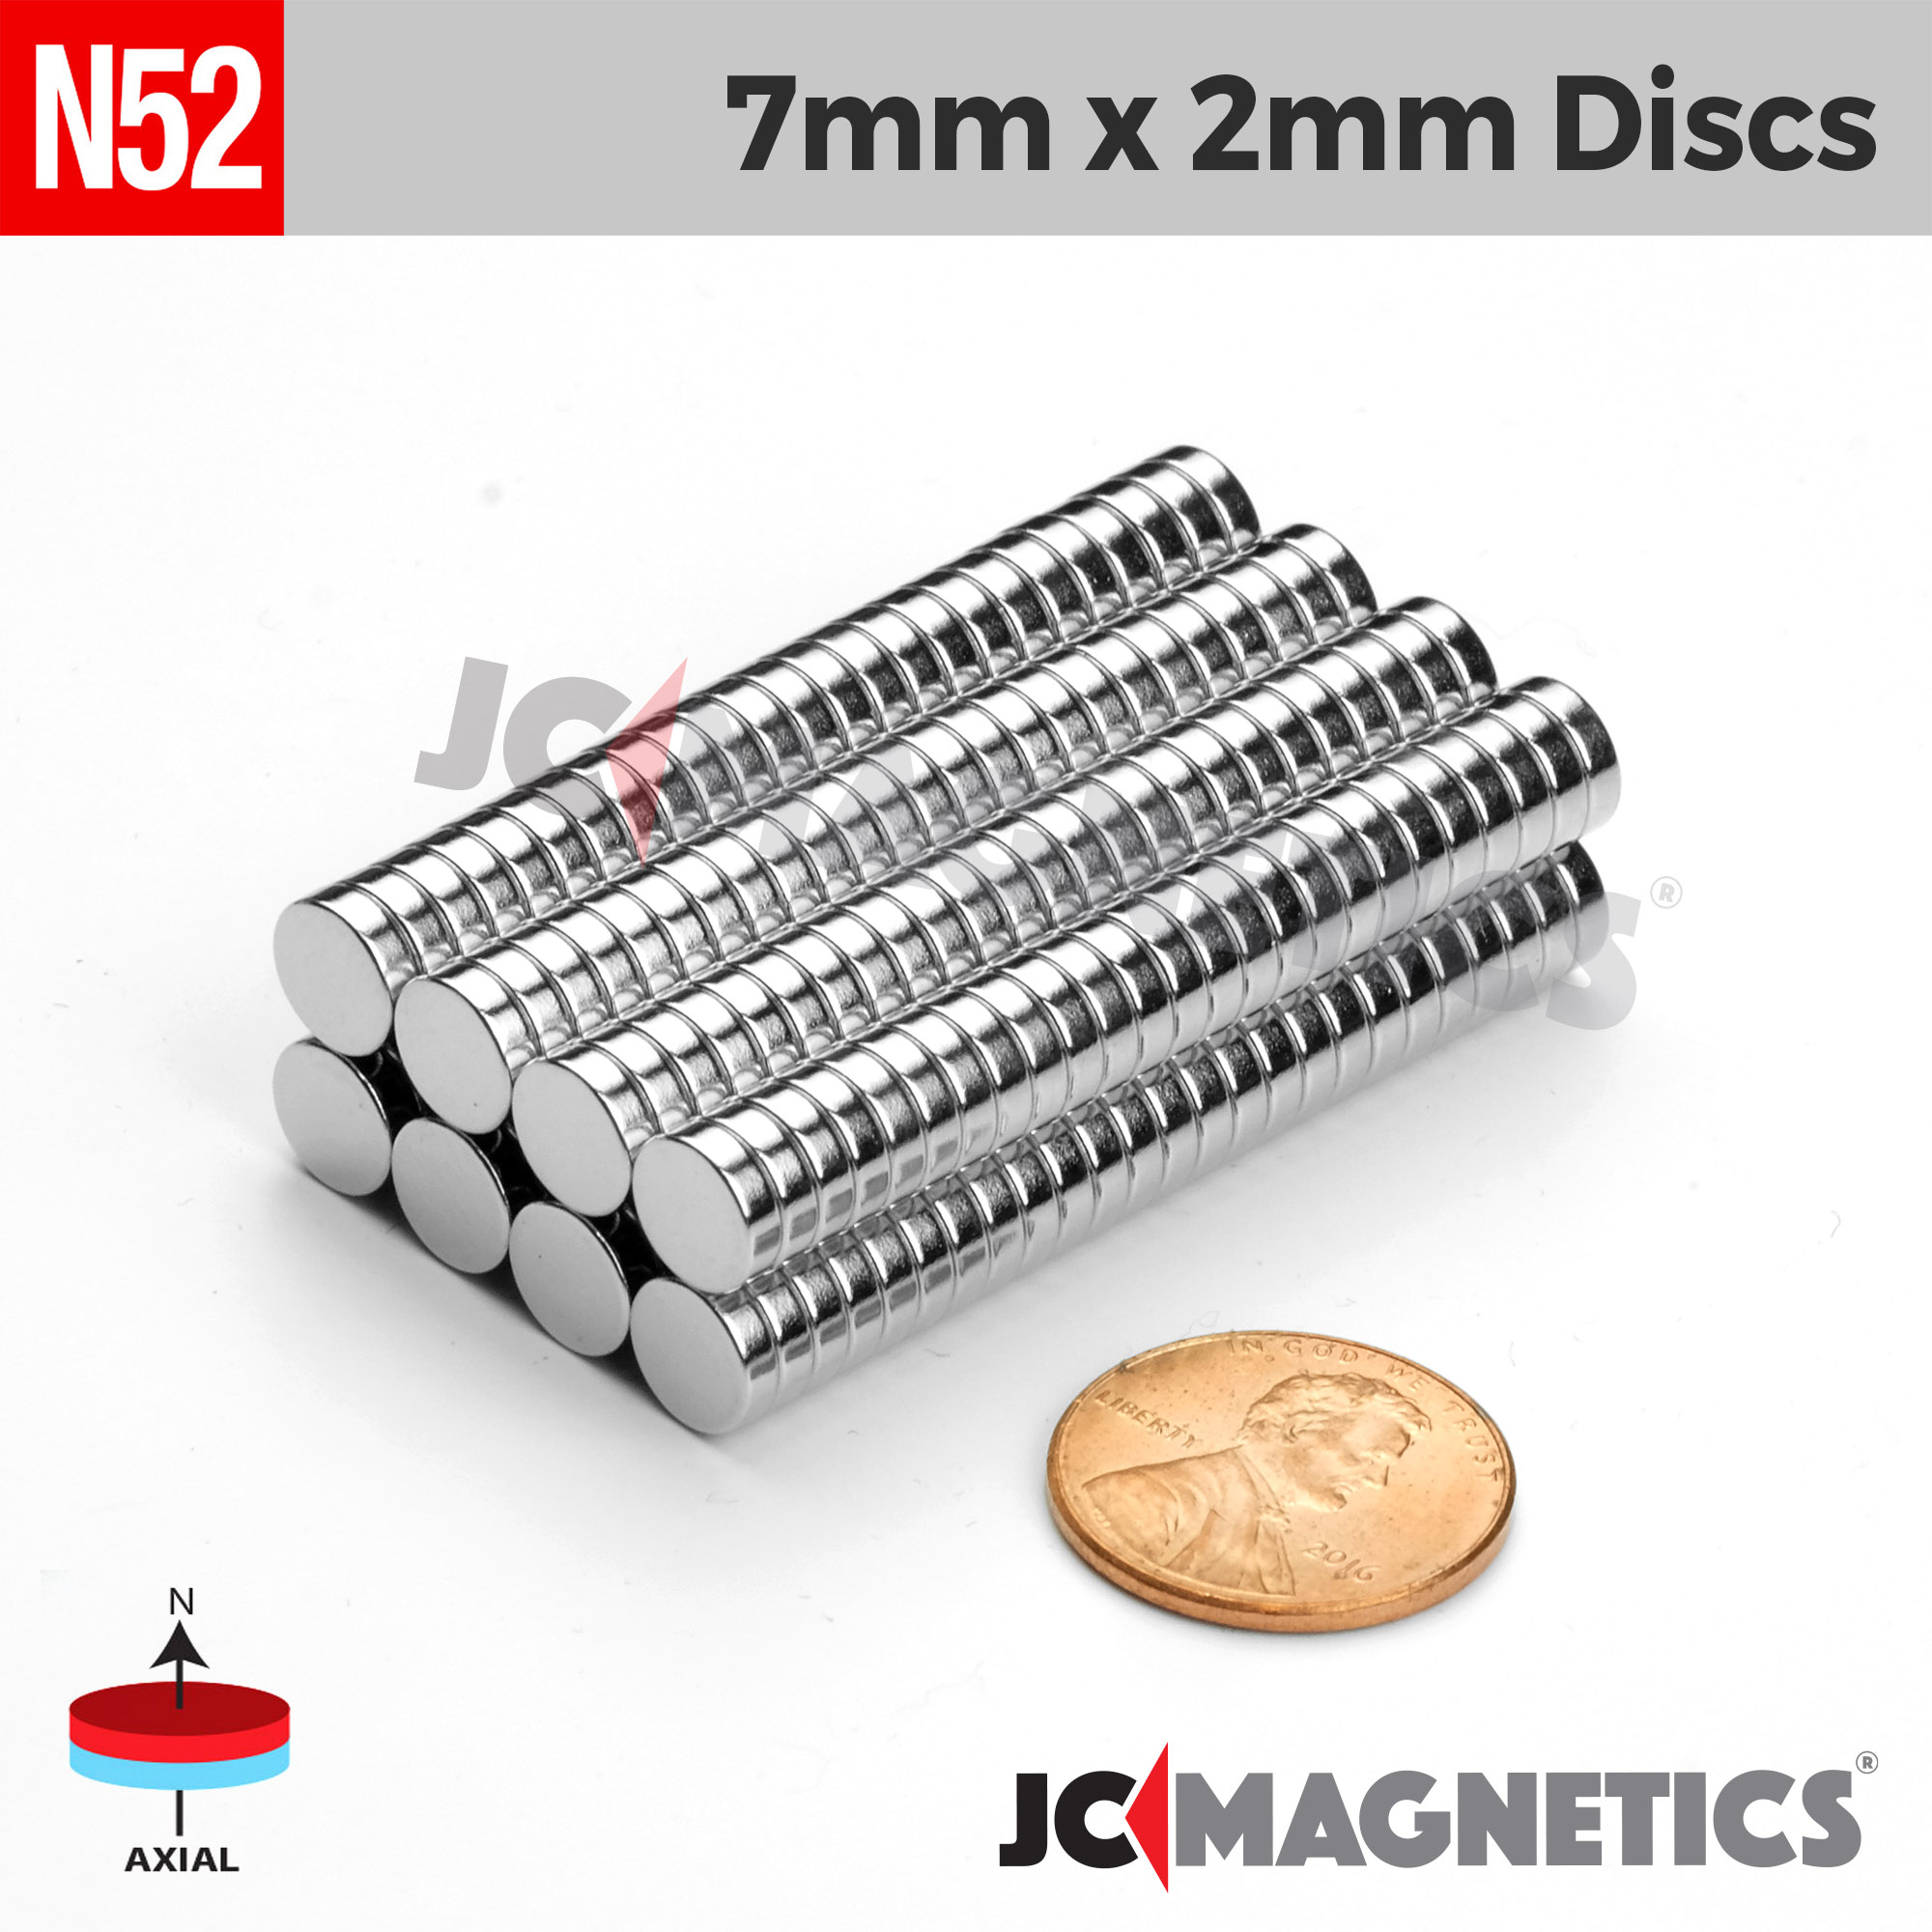 https://jc-magnetics.com/image/cache/catalog/magnets/7x2mm-discs-2000x2000.jpg